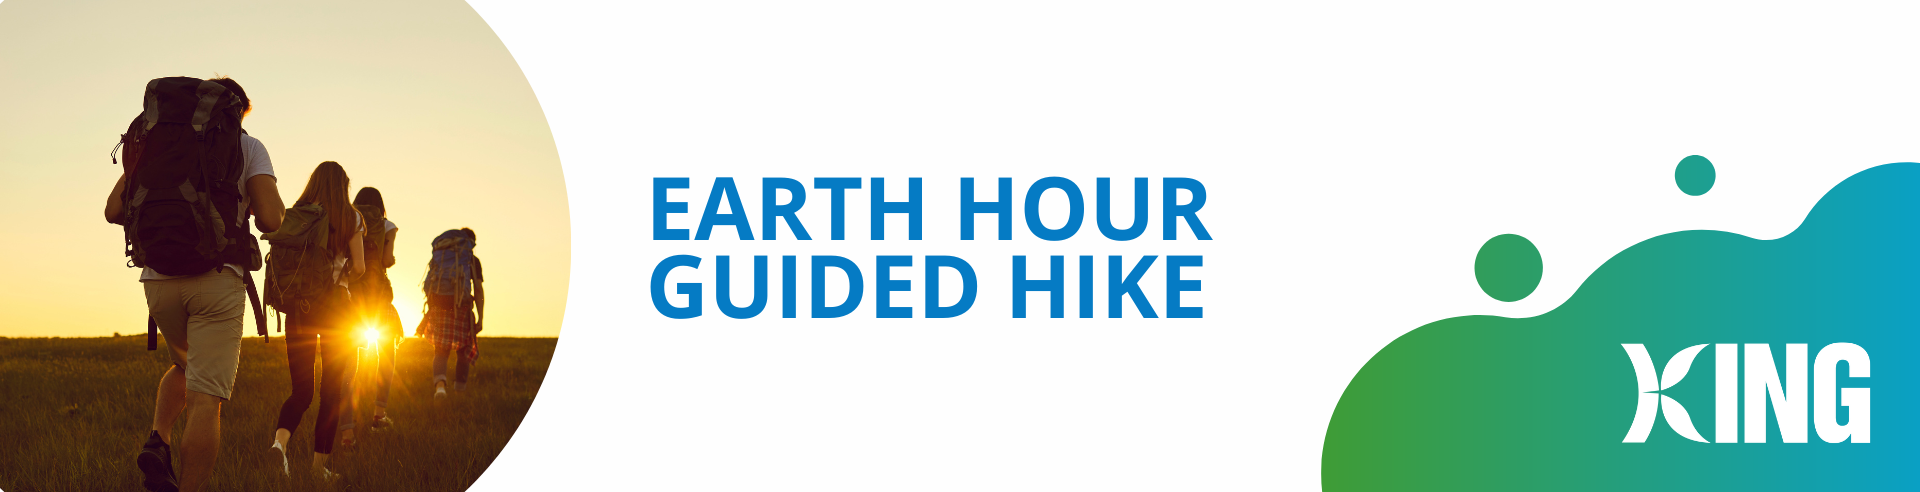 Earth Hour Guided Hike